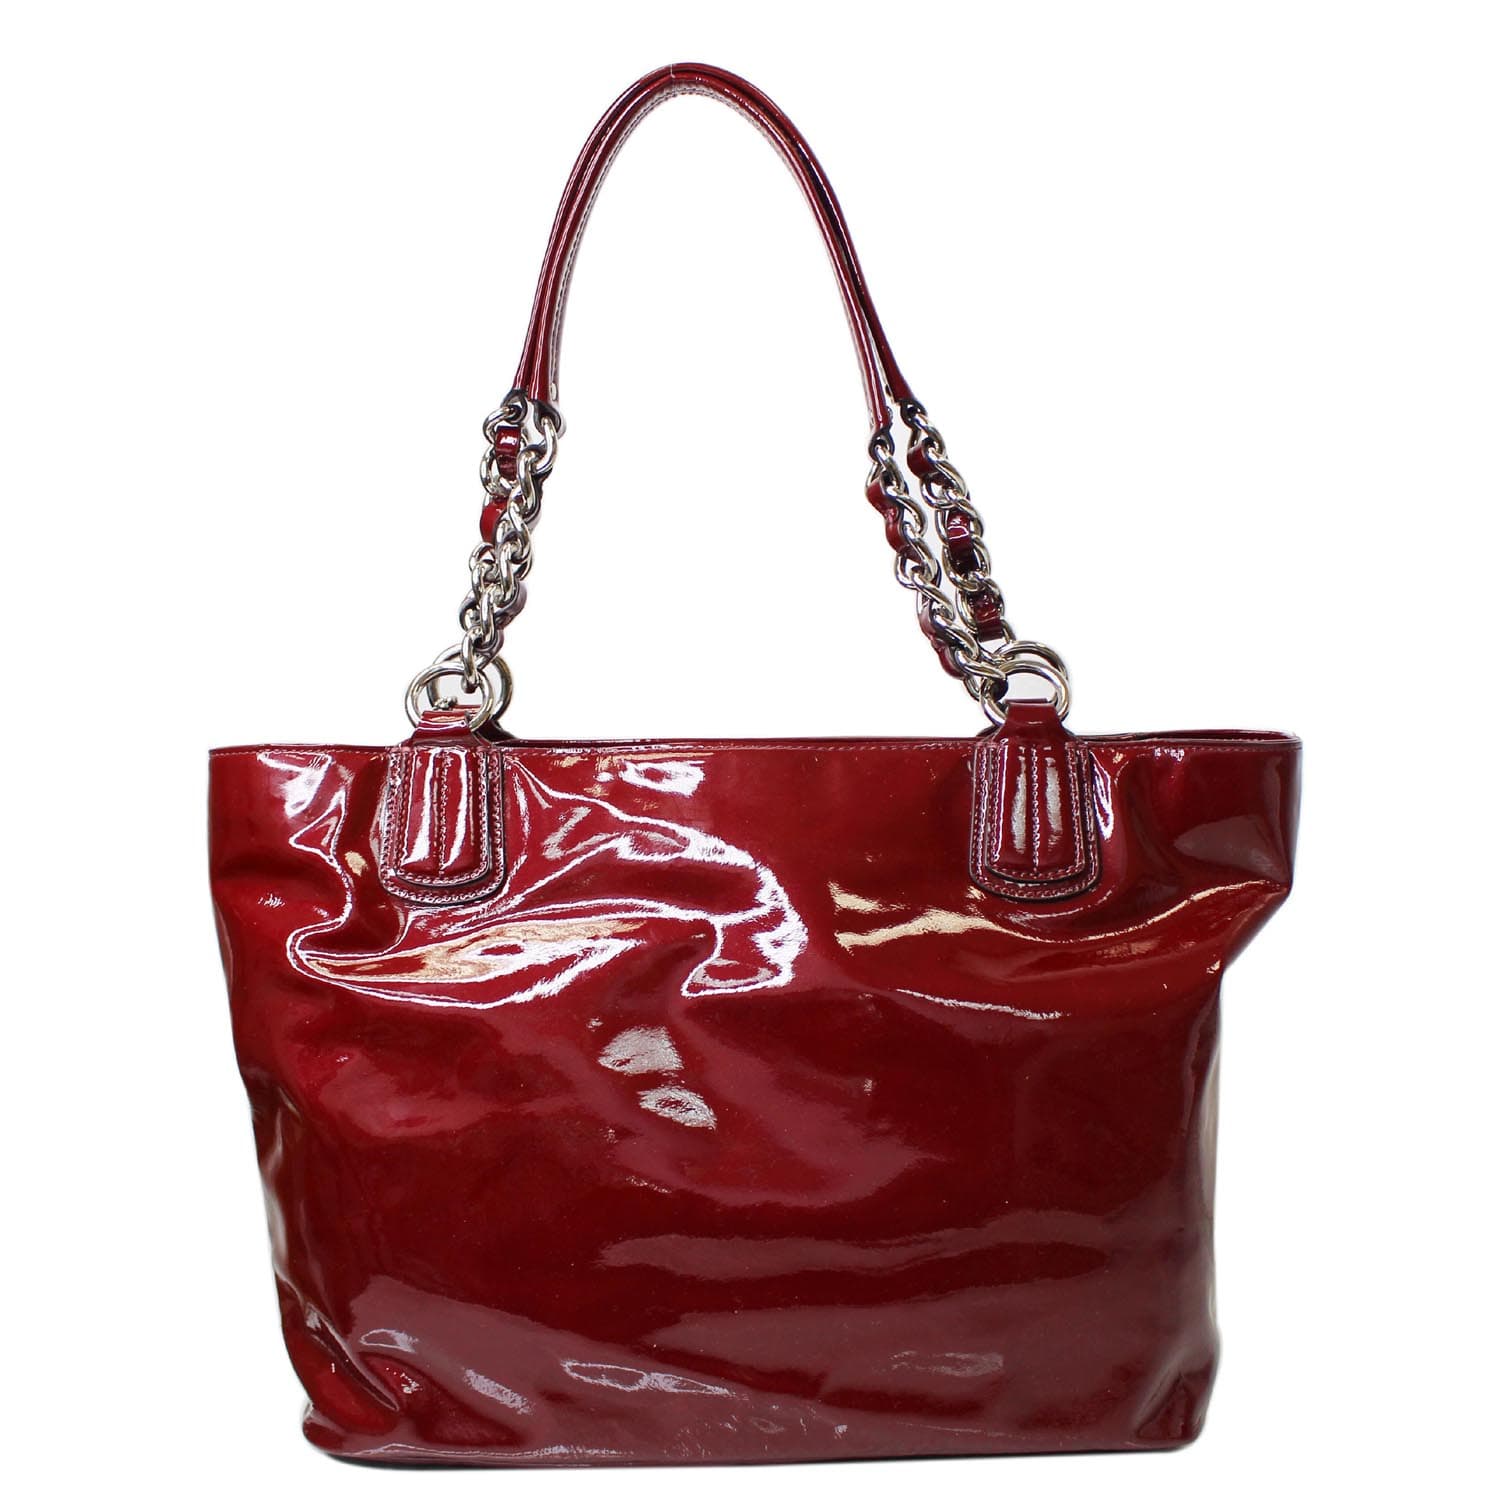 Patent leather handbag